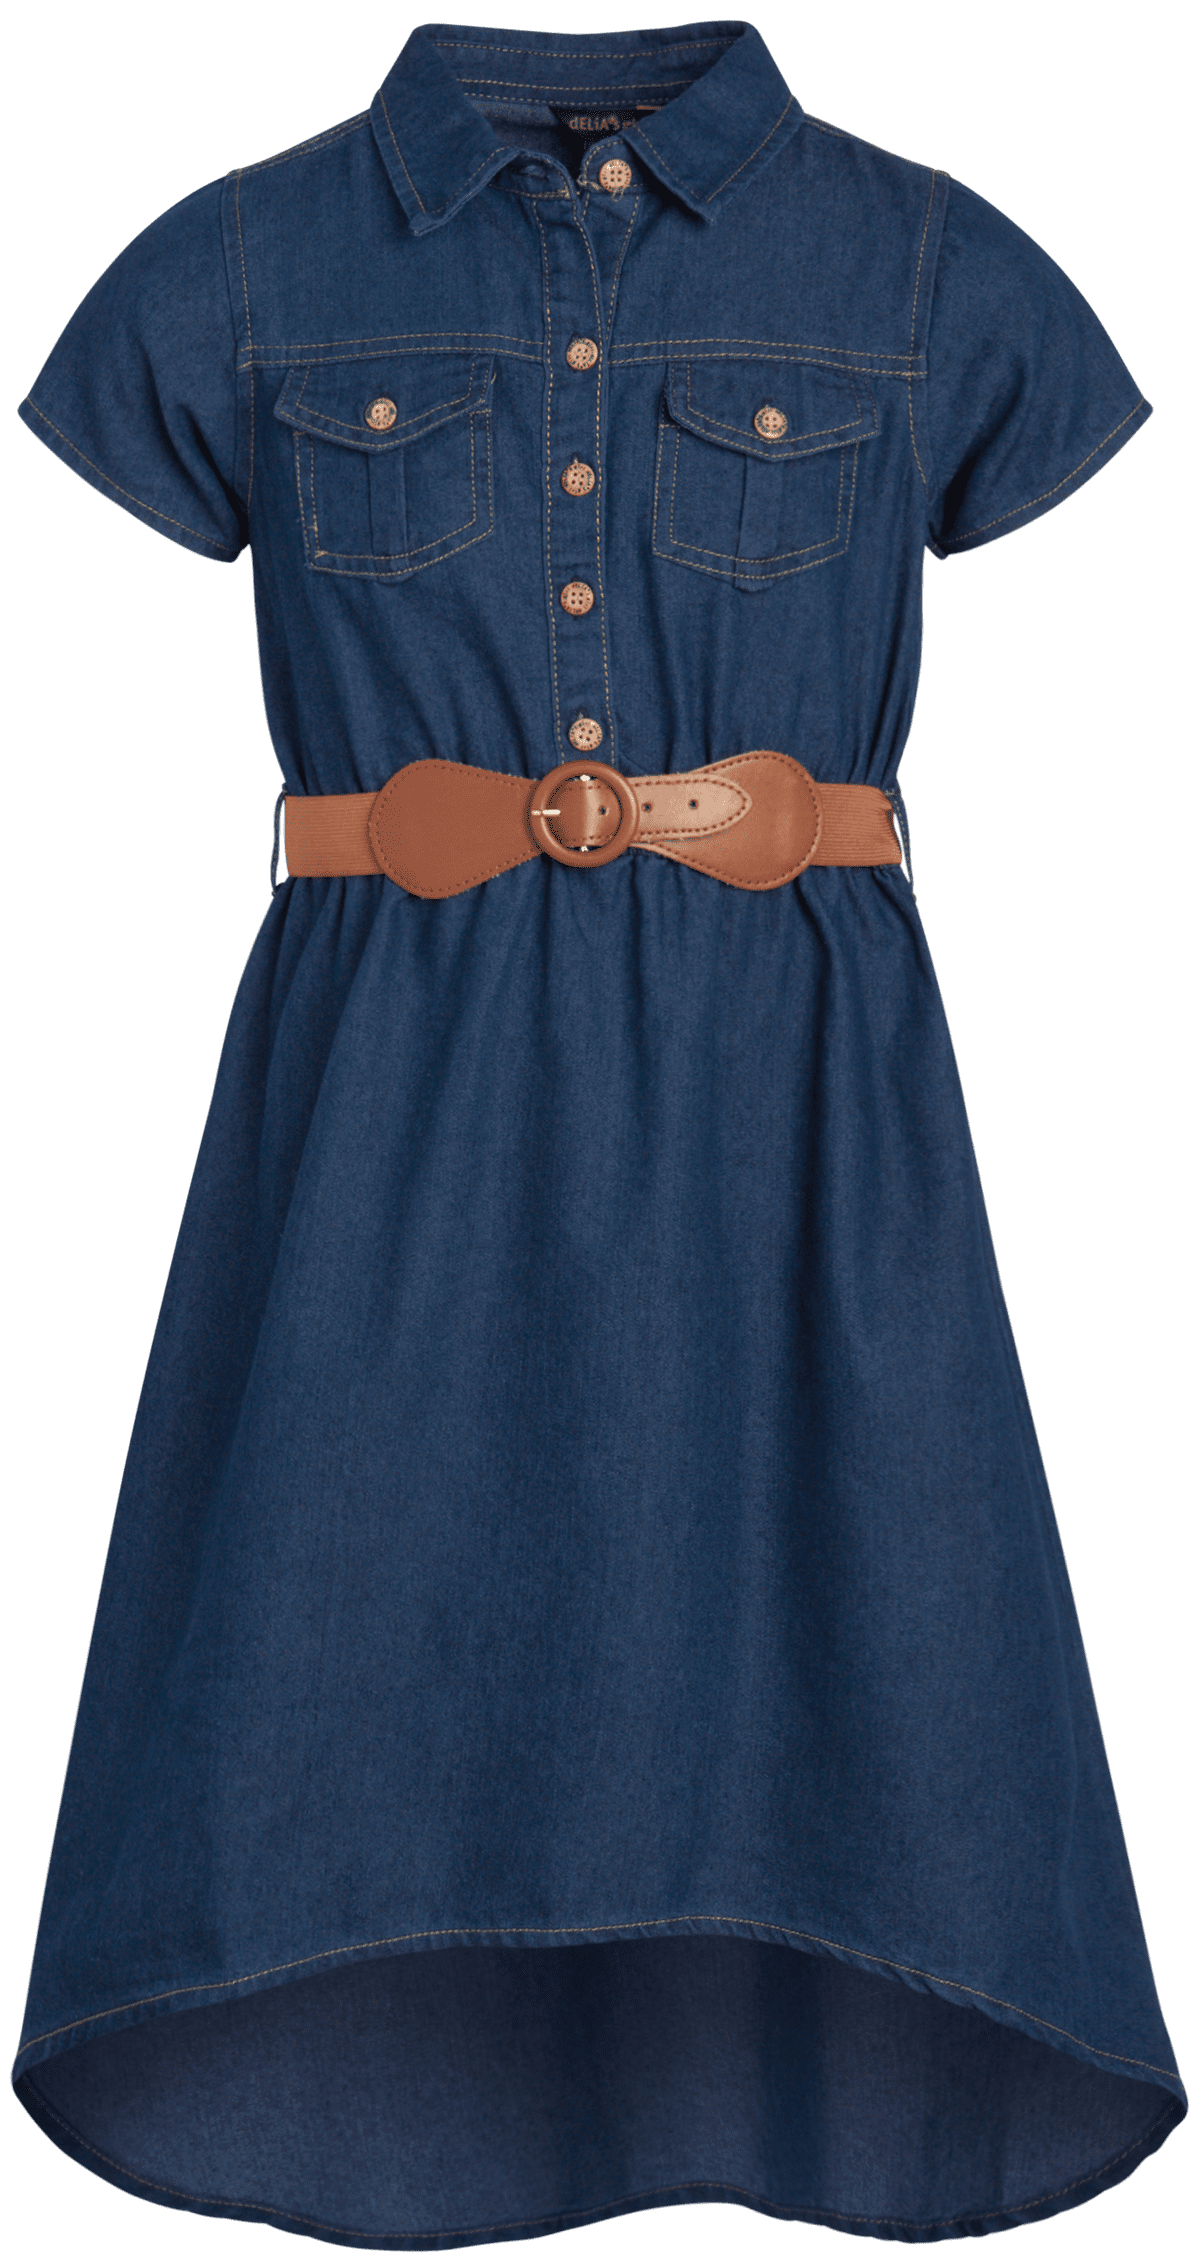 dELiA*s Girls' Dress - Belted Boho Denim Peasant Jean Dress for Girls ...